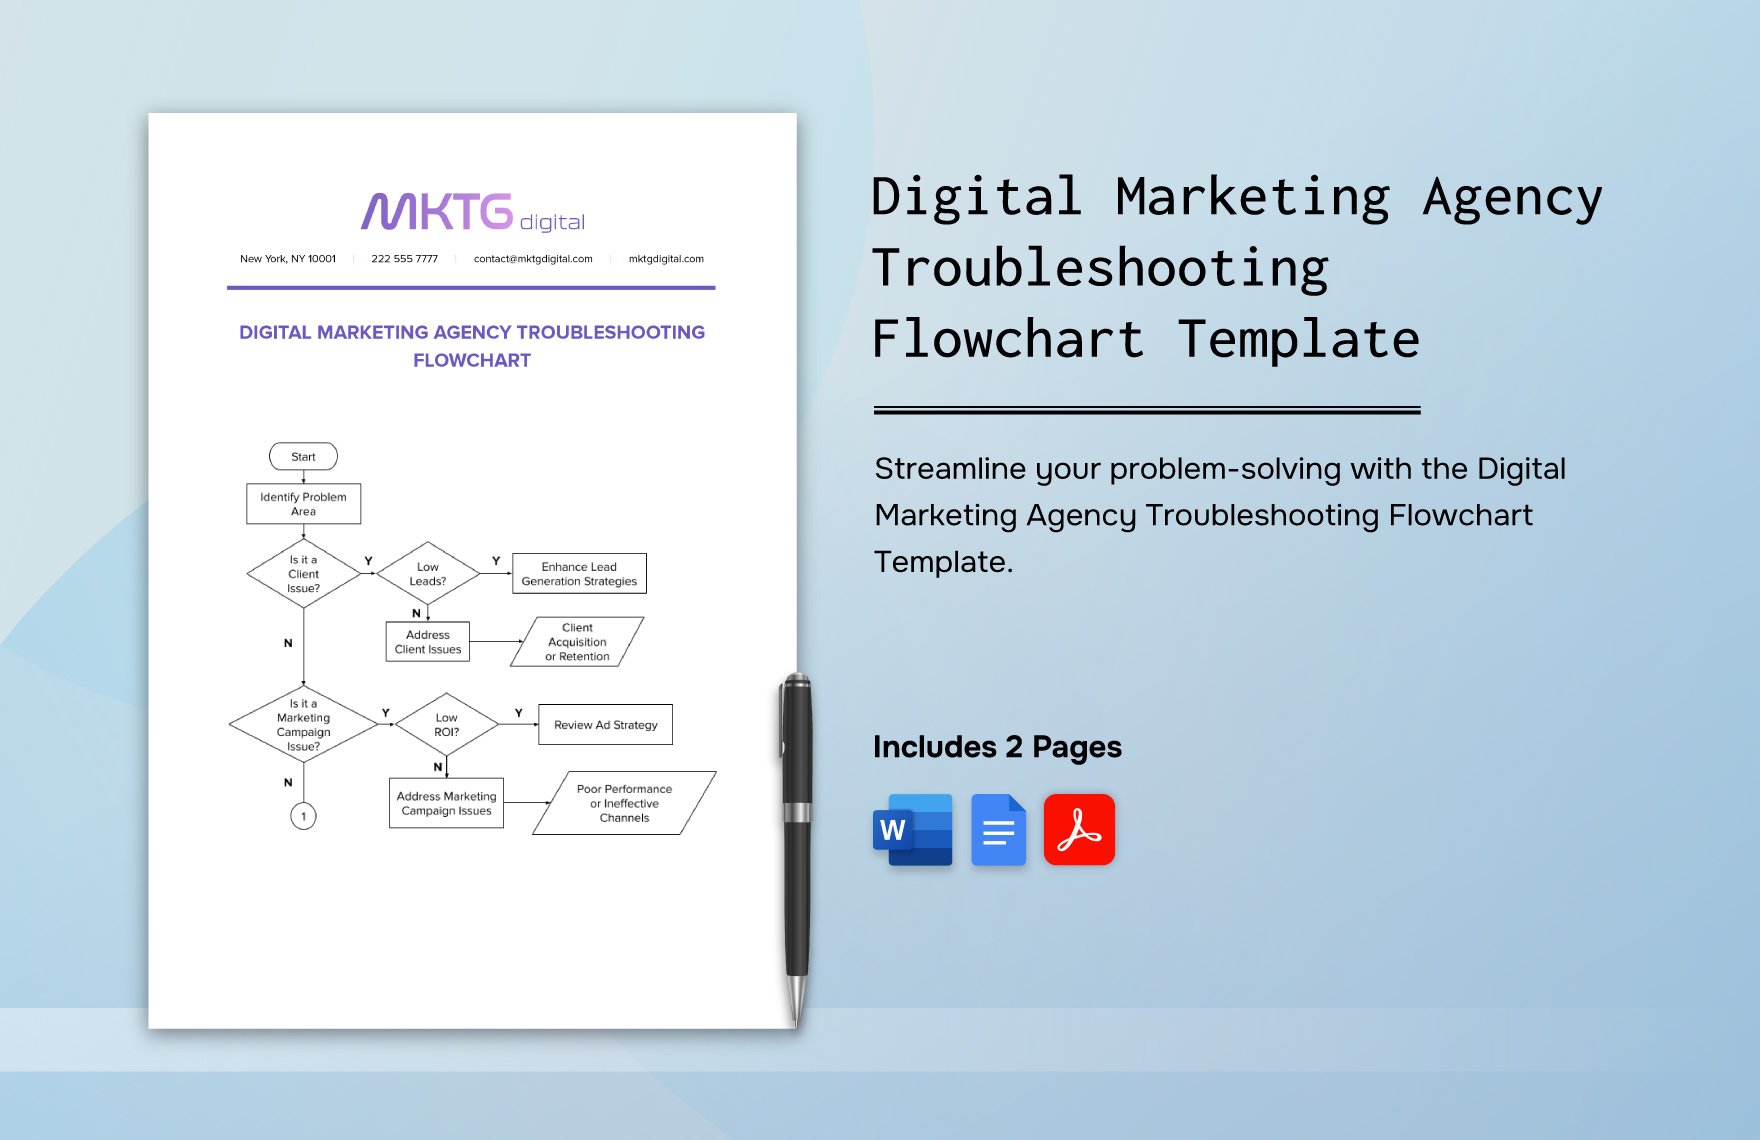 Digital Marketing Agency Troubleshooting Flowchart Template